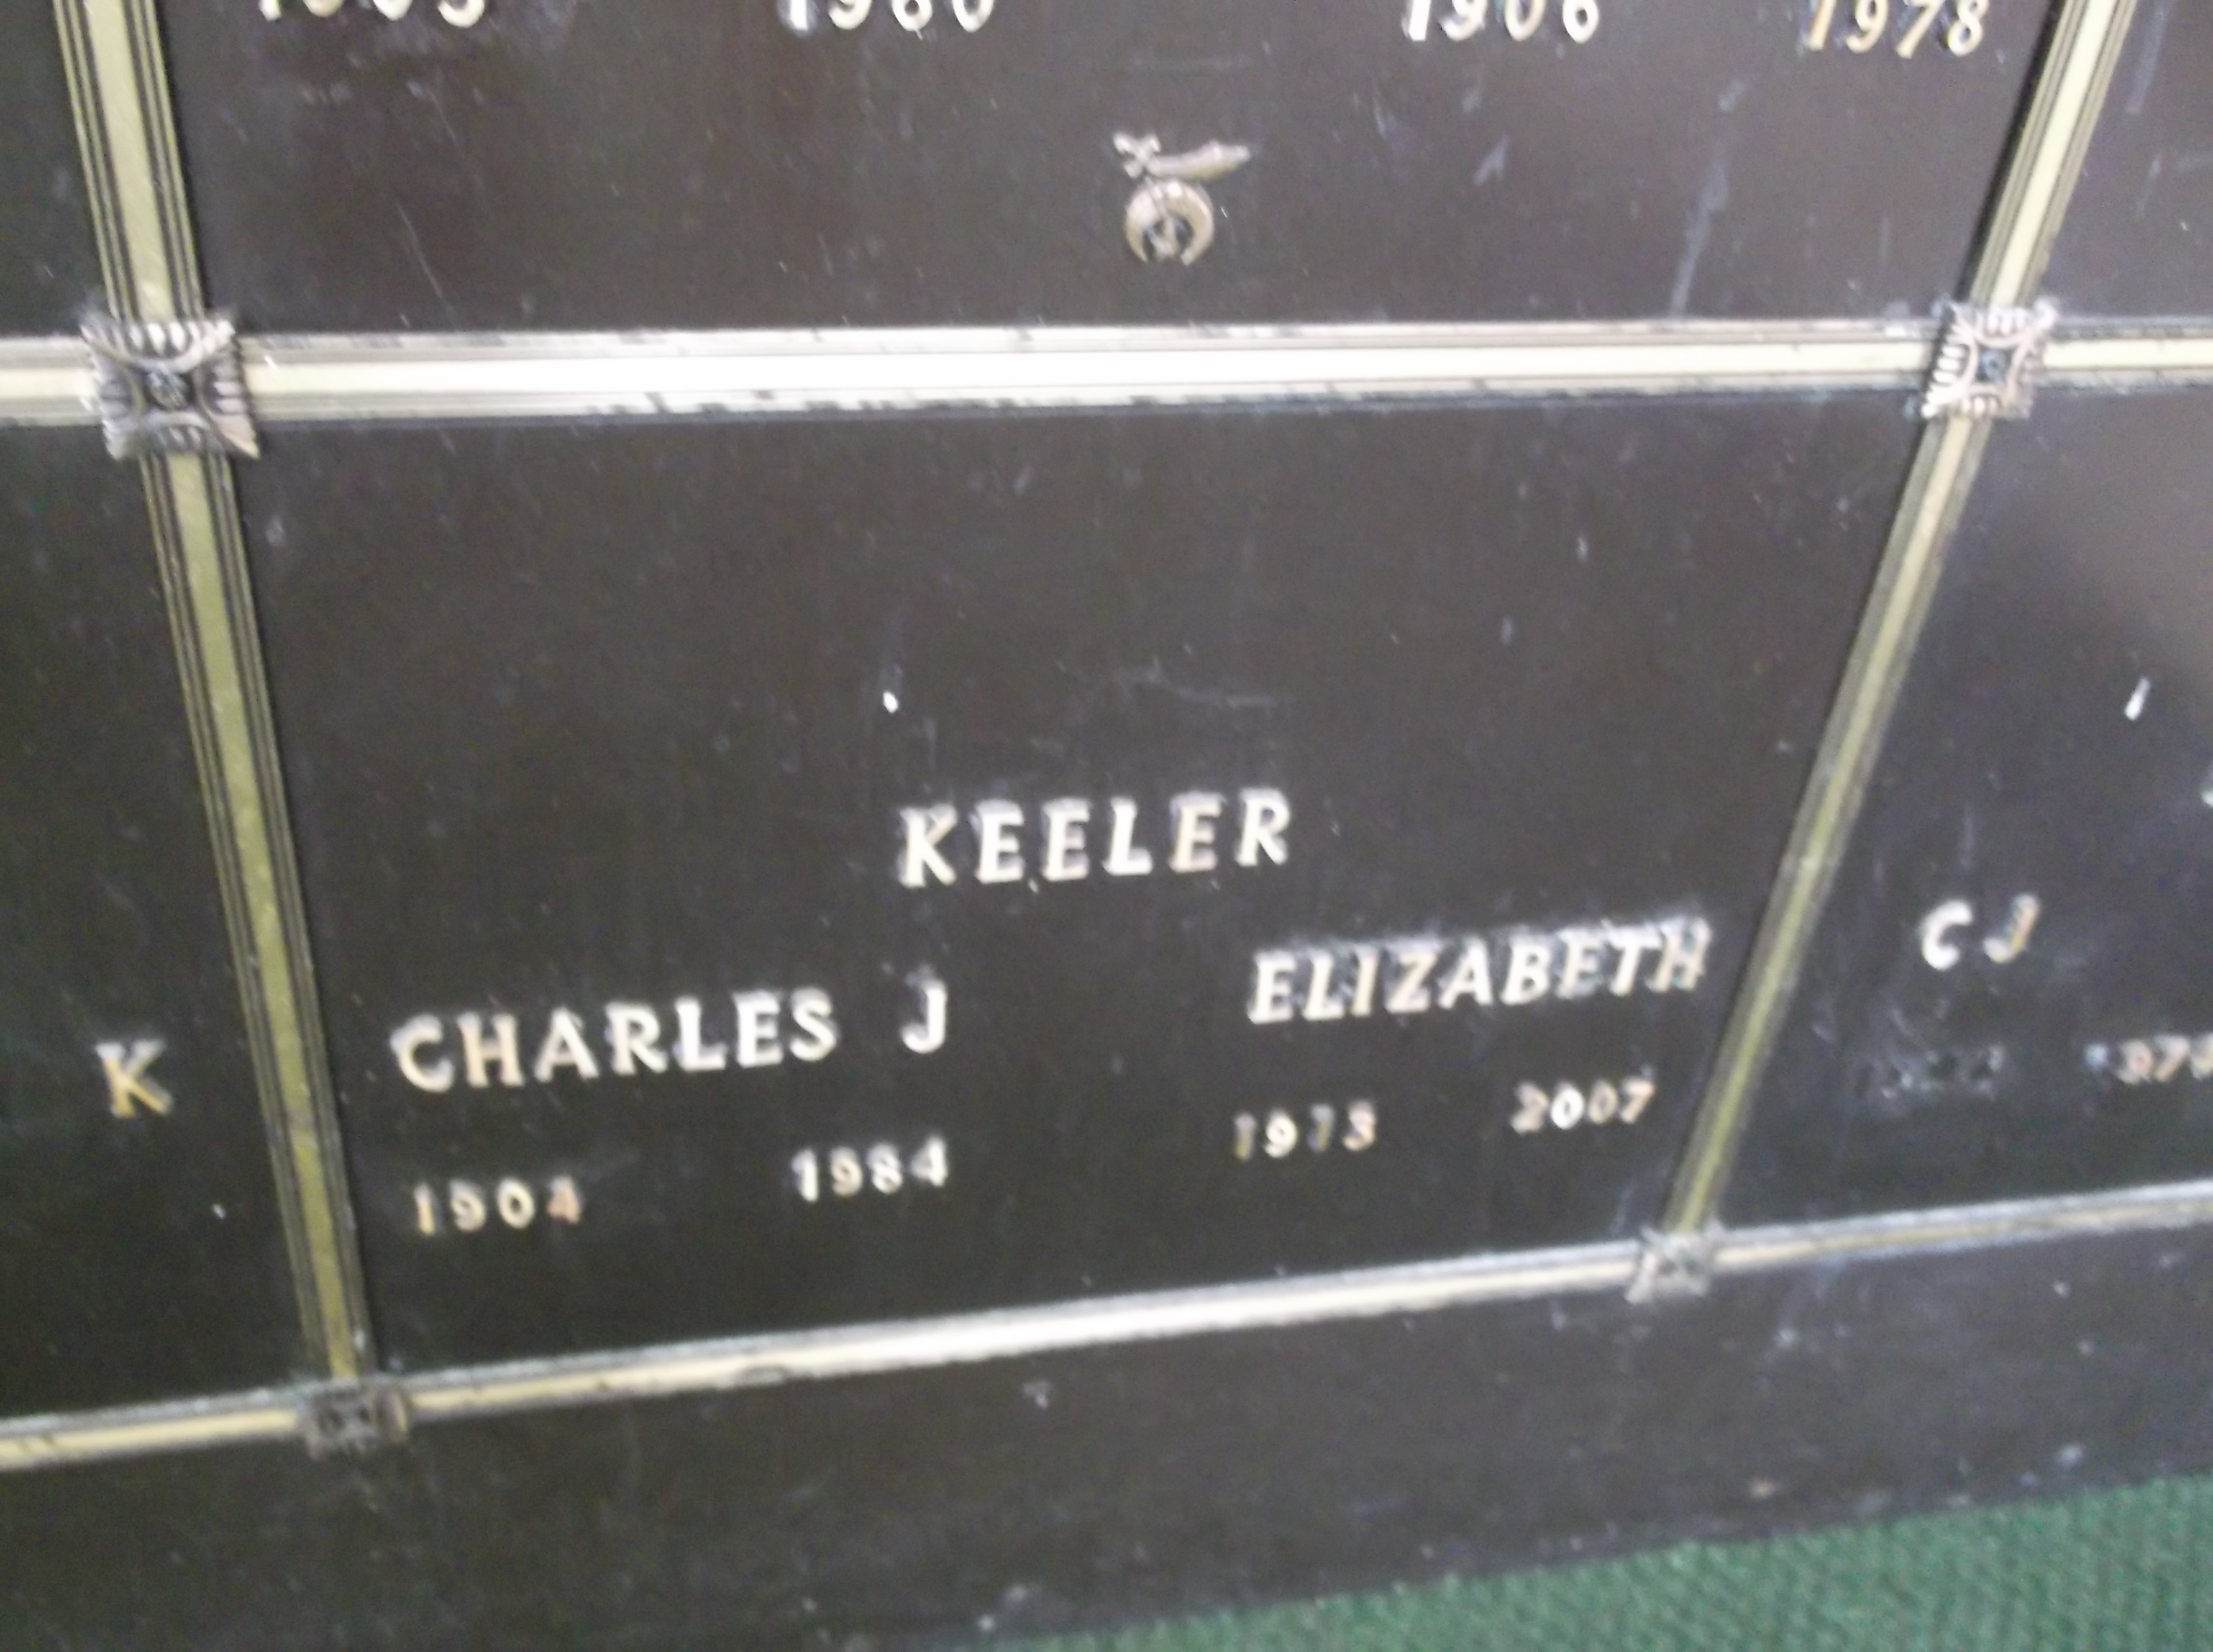 Charles J Keeler